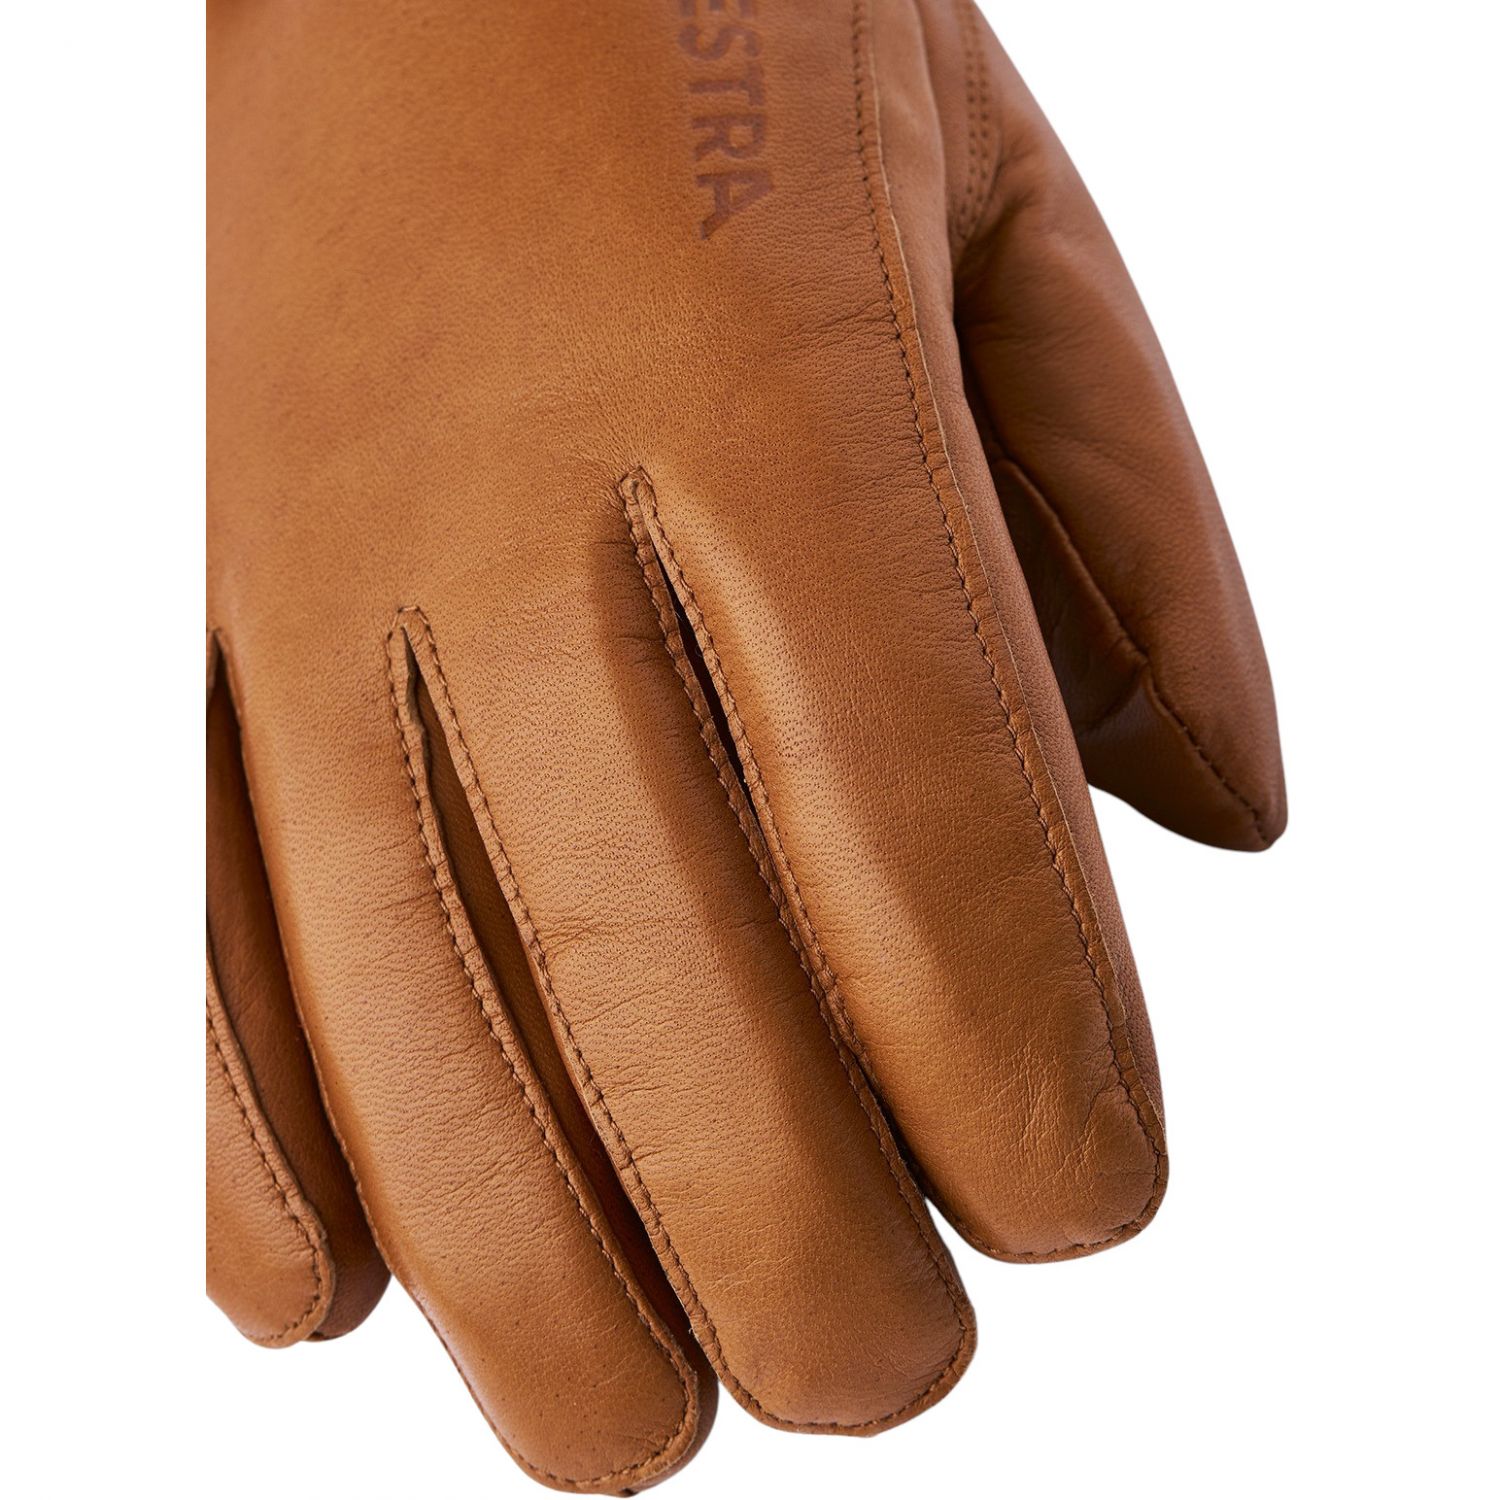 Hestra Leather Swisswool Classic, handsker, kork